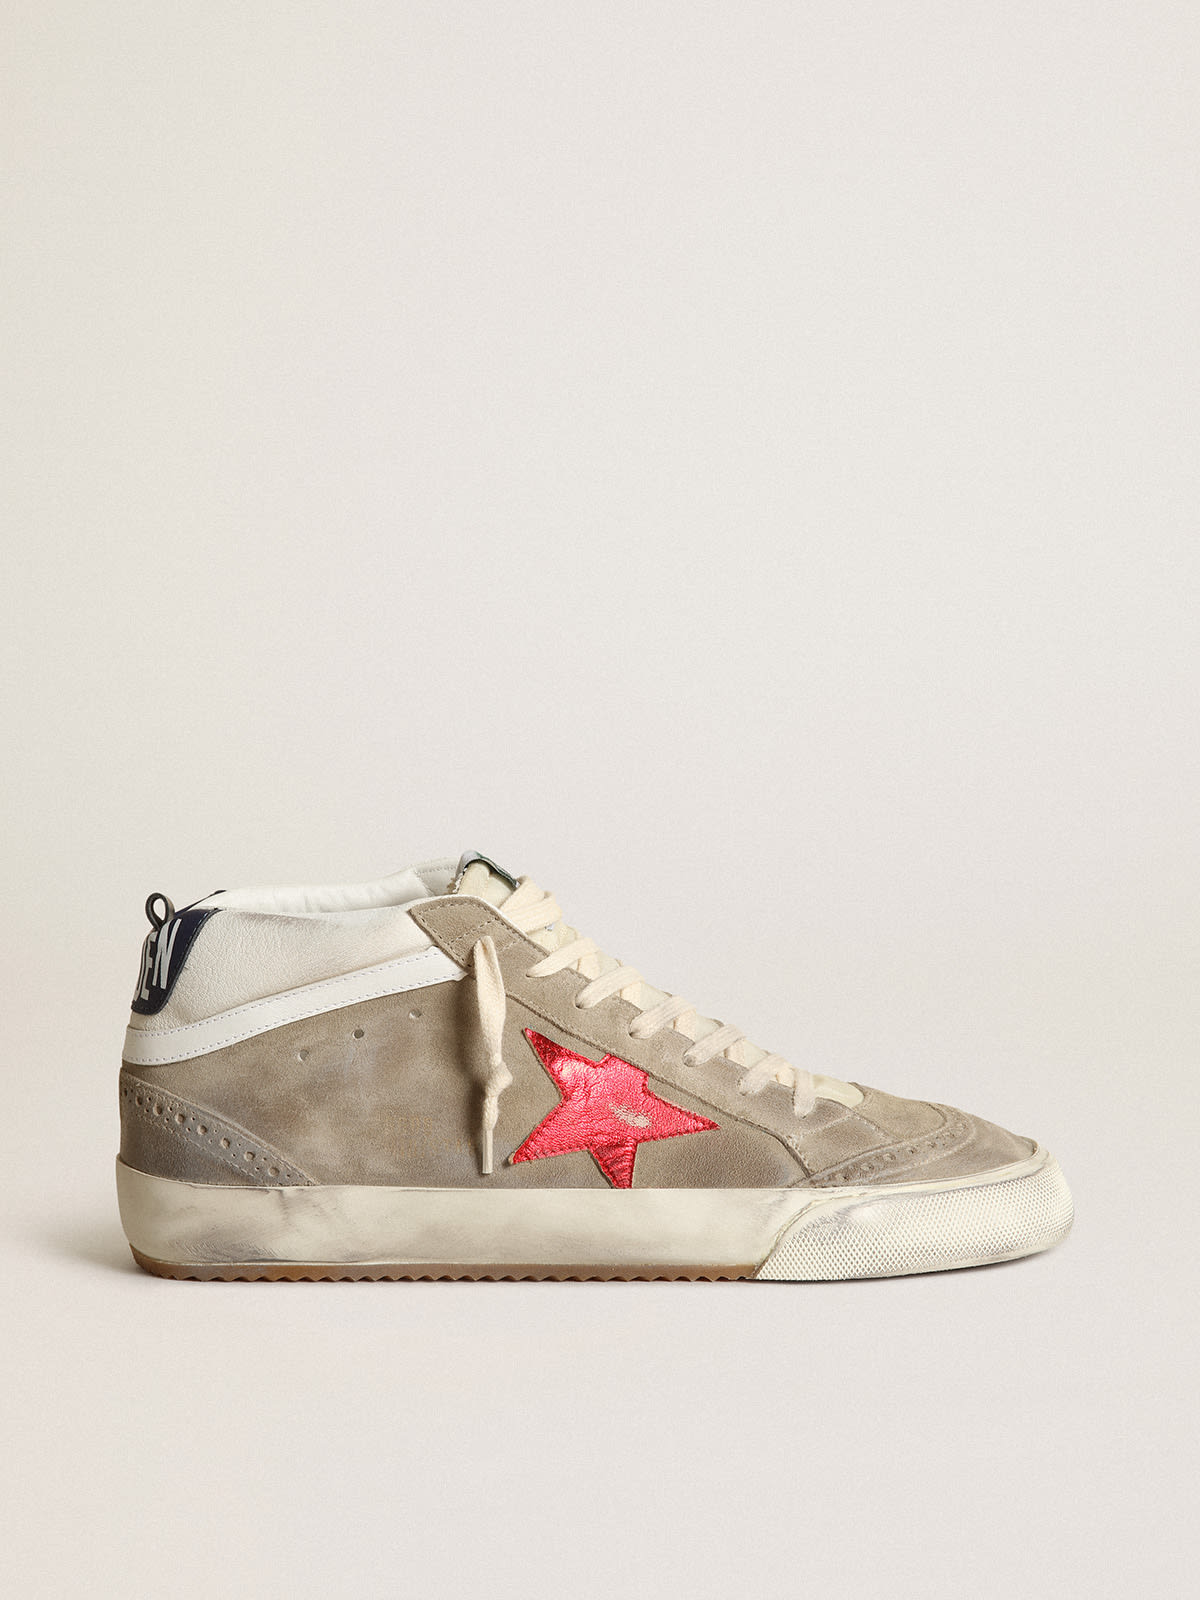 Golden Goose - Sneaker Mid Star in suede color tortora con stella in pelle laminata rossa e virgola in pelle bianca in 